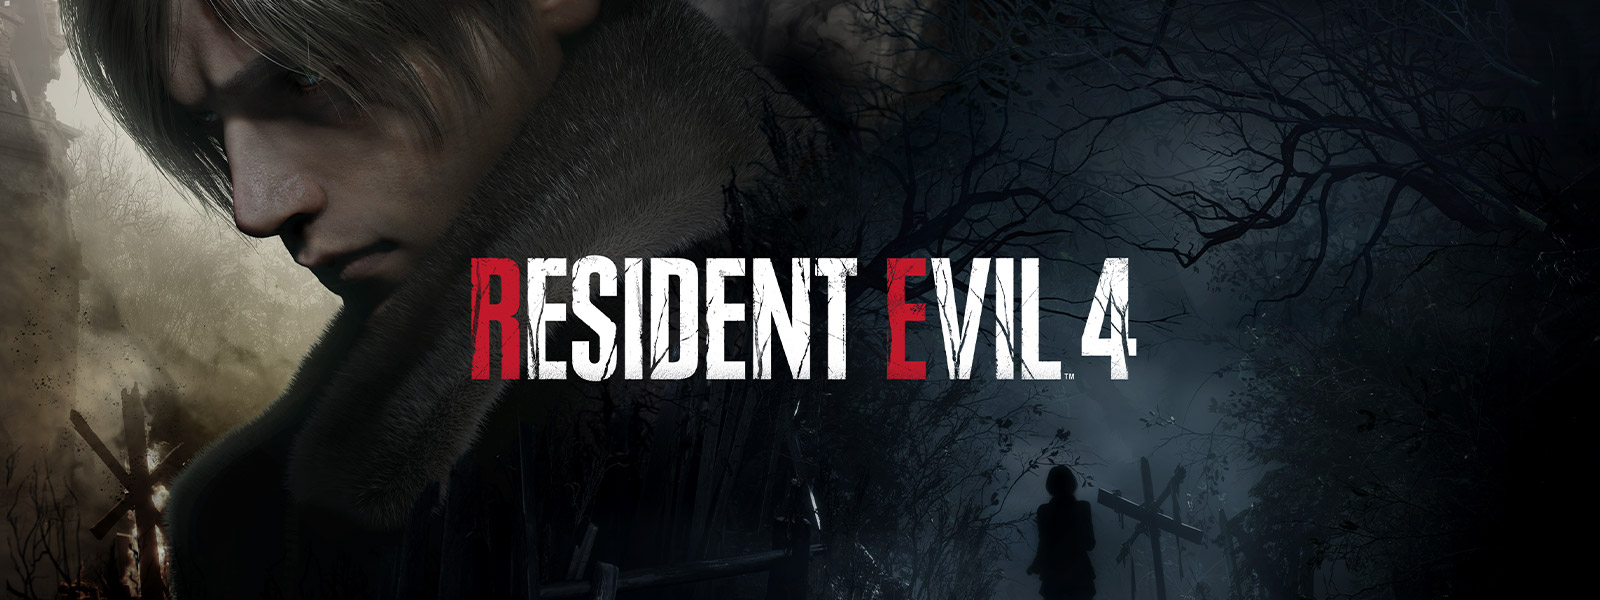 Resident Evil 4, Ένας άνδρας με γκρίζα μαλλιά απομακρύνεται με σοβαρό ύφος καθώς μια γυναίκα προχωρά σε ένα σκοτεινό, τρομακτικό μονοπάτι στο δάσος.